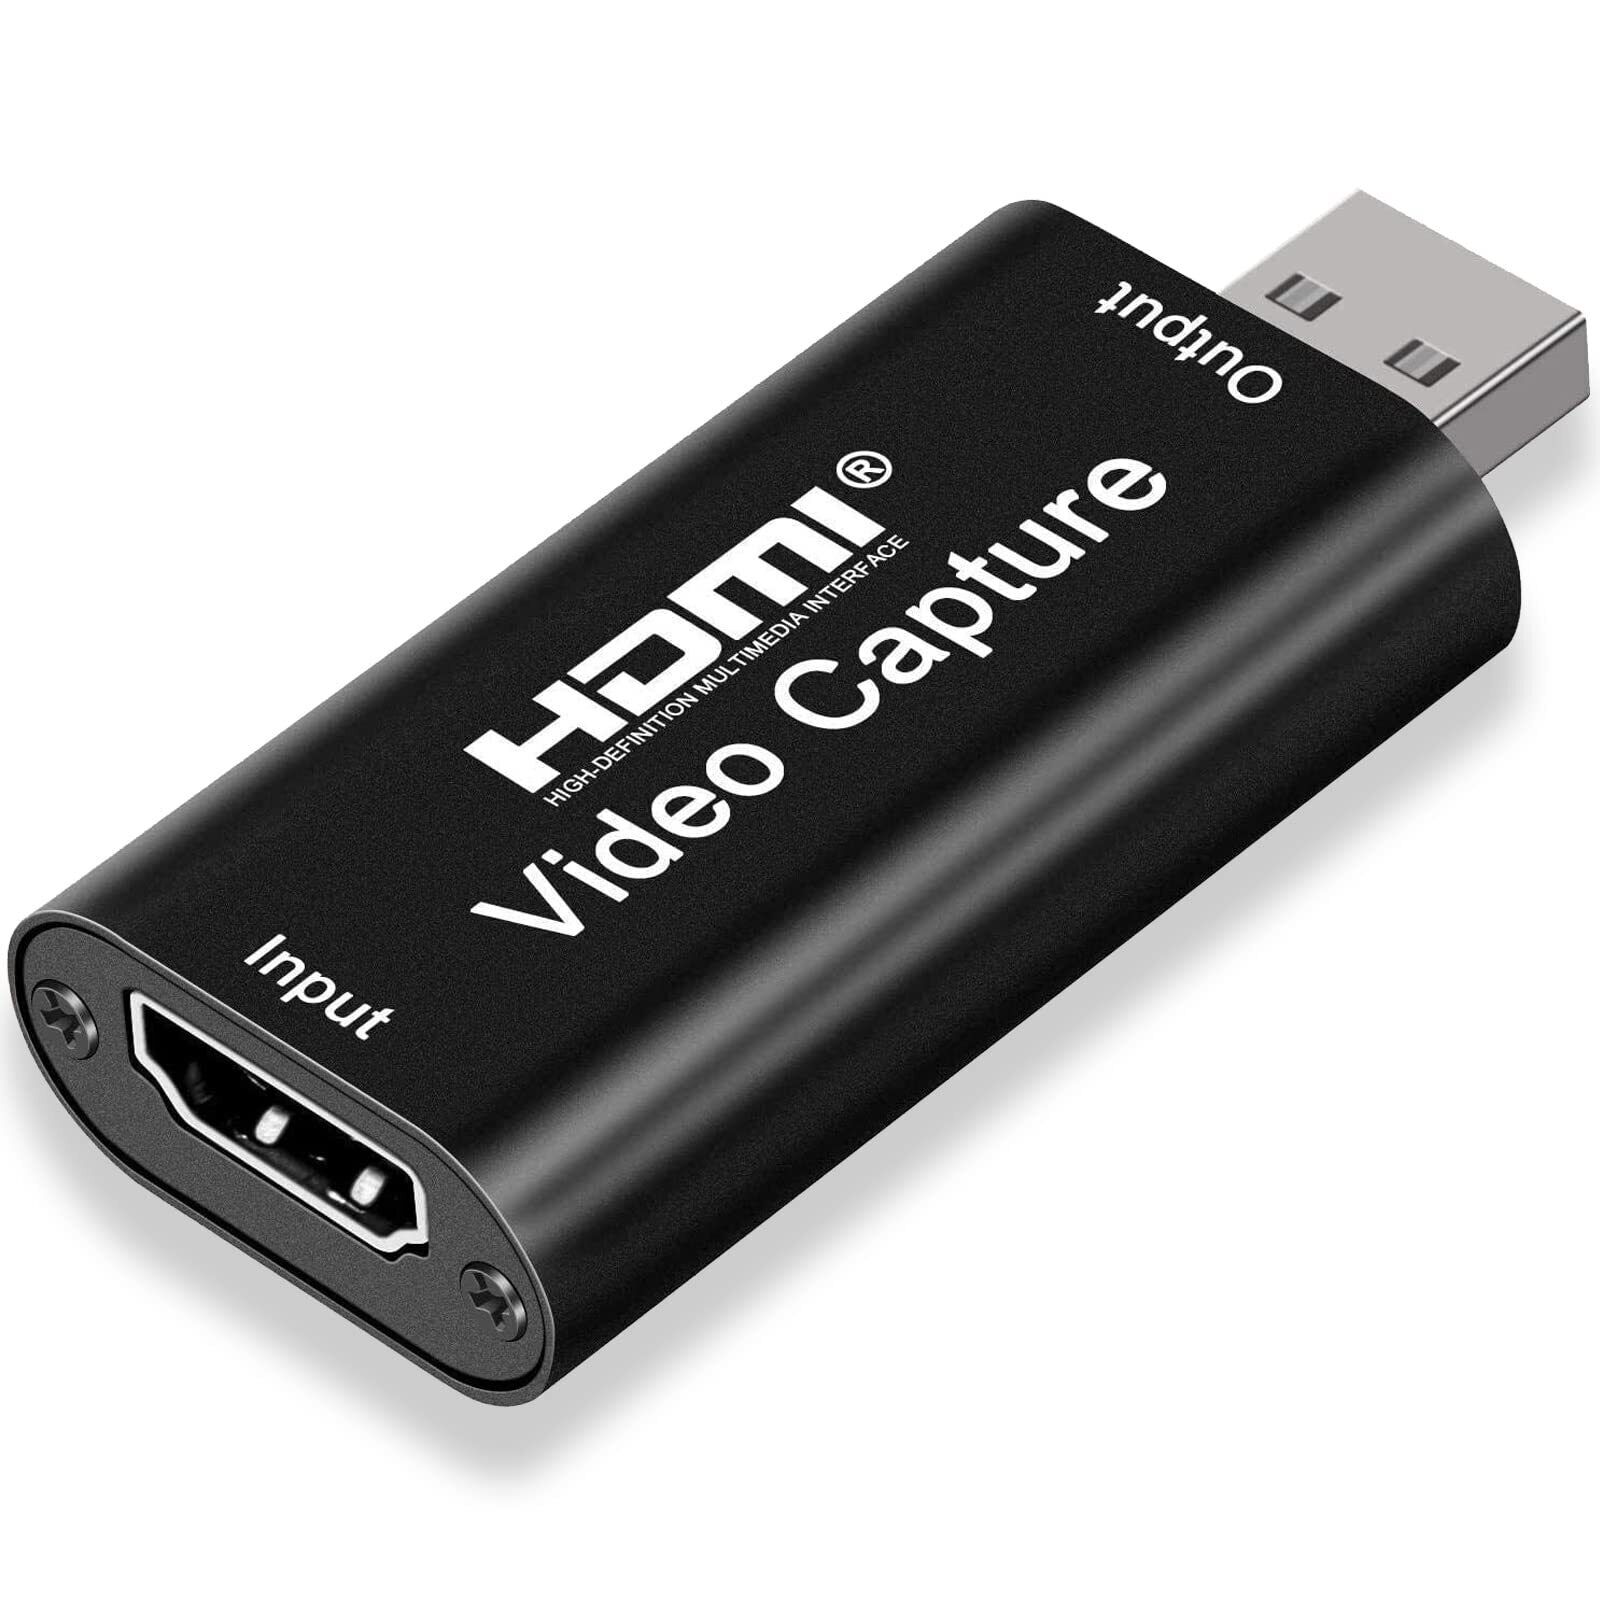 4K HDMI Video Capture Card, Cam Link Card Game Audio Capture Card Upgraded Ca...